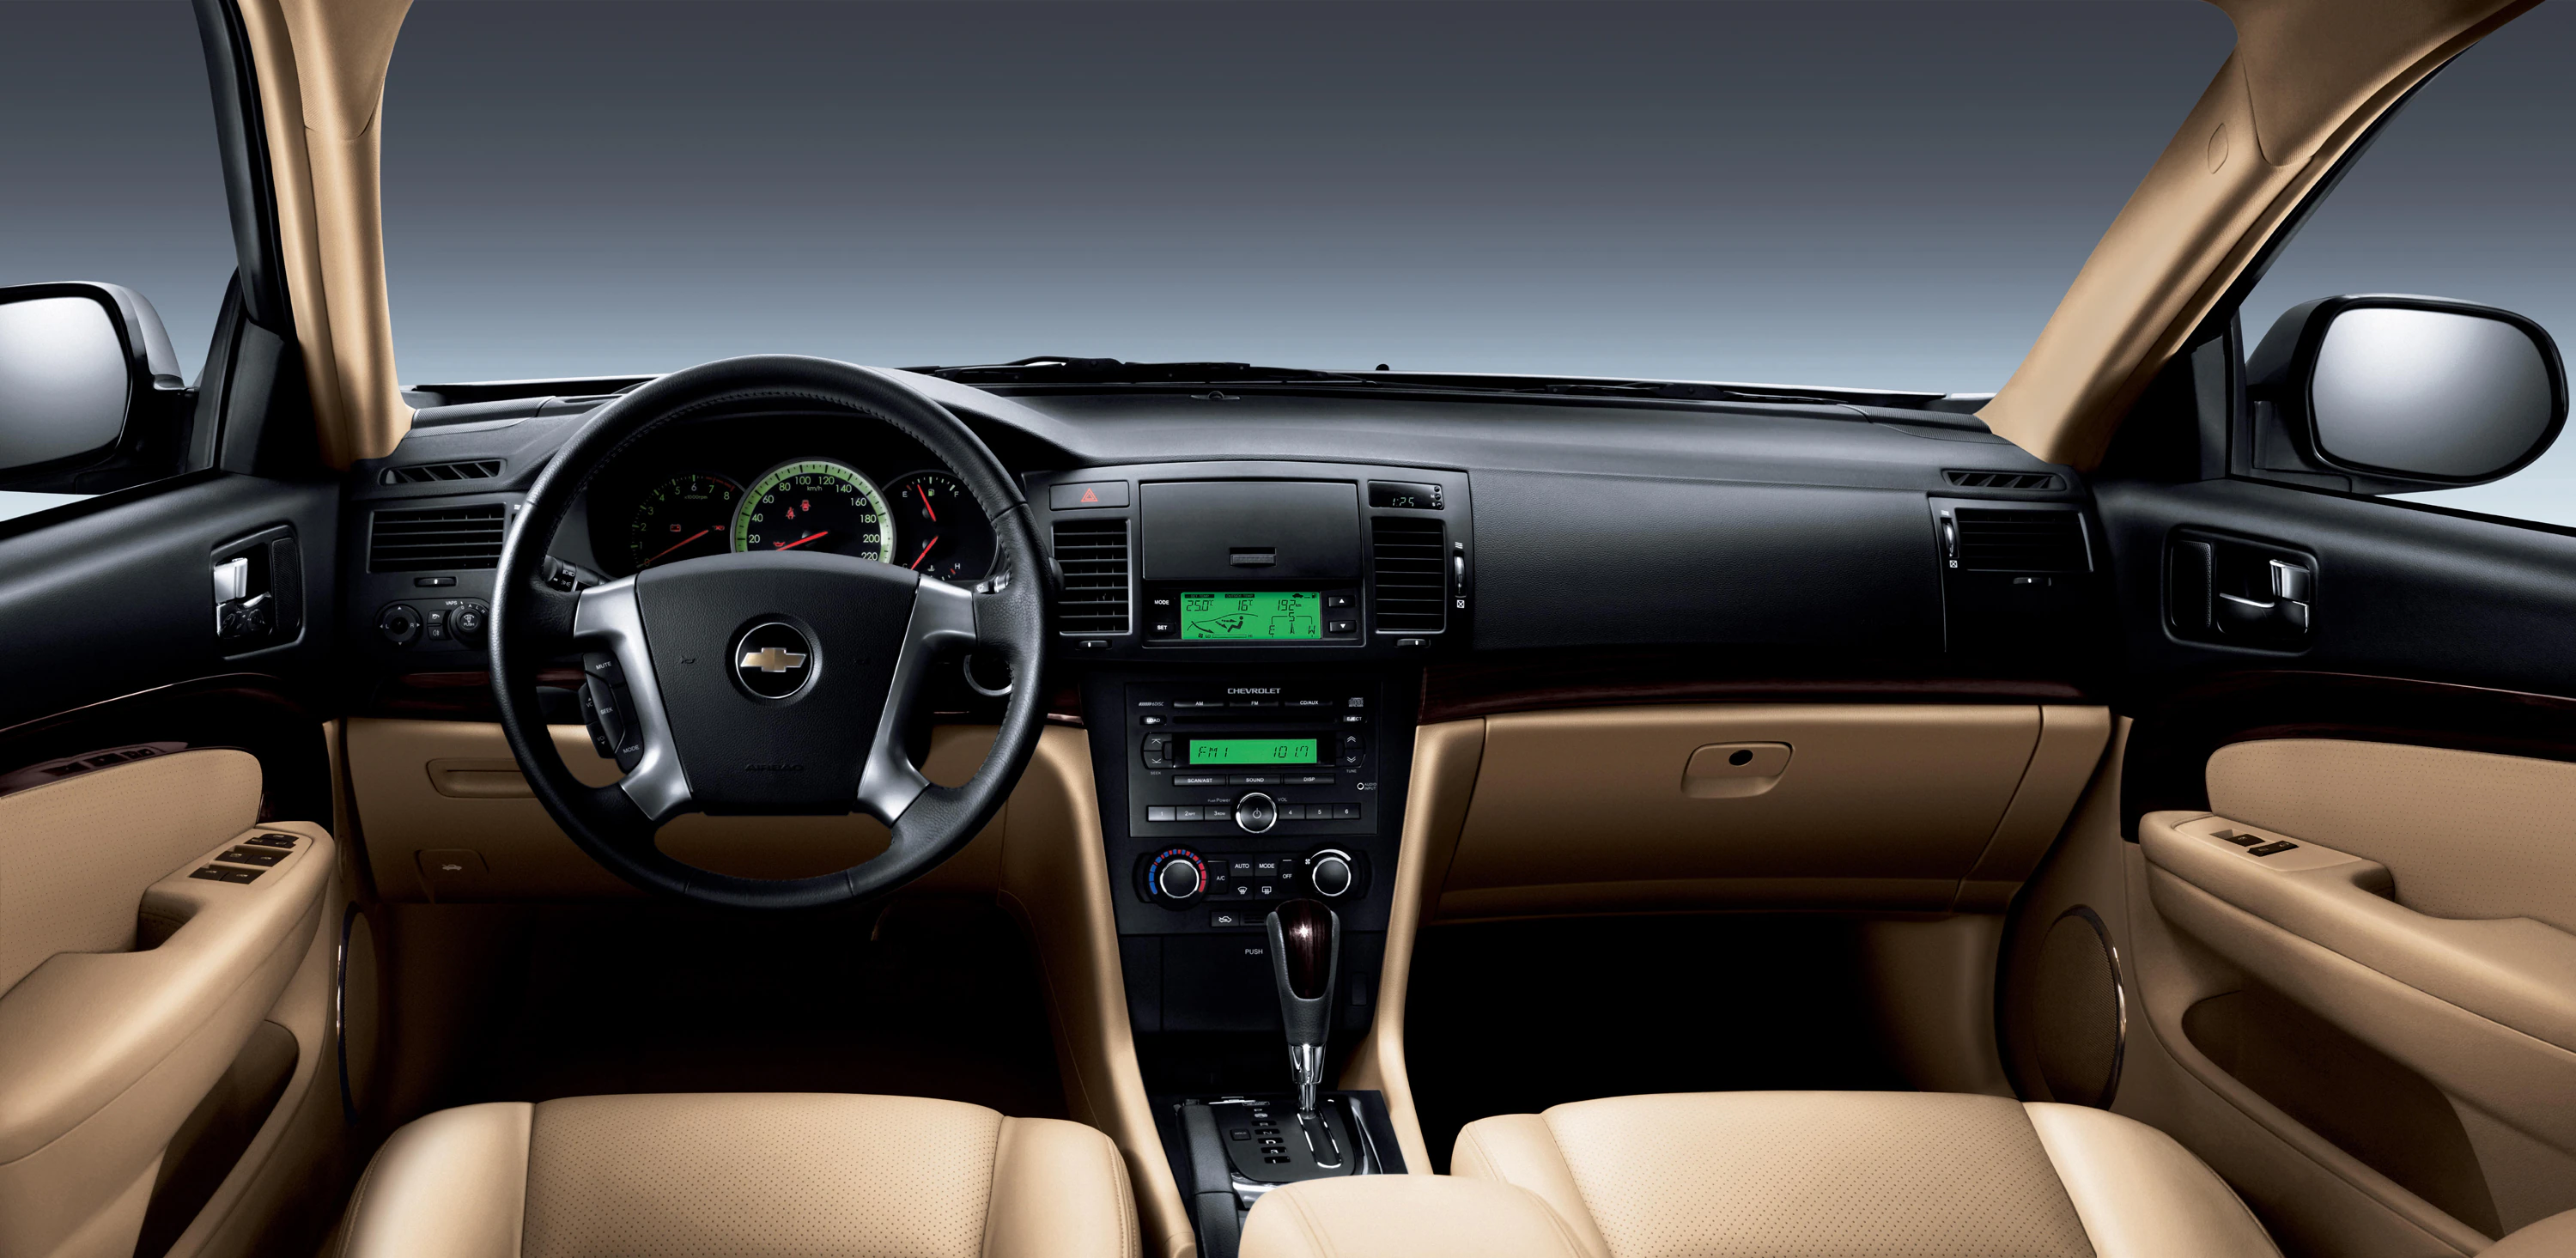 Chevrolet Epica interior - Cockpit